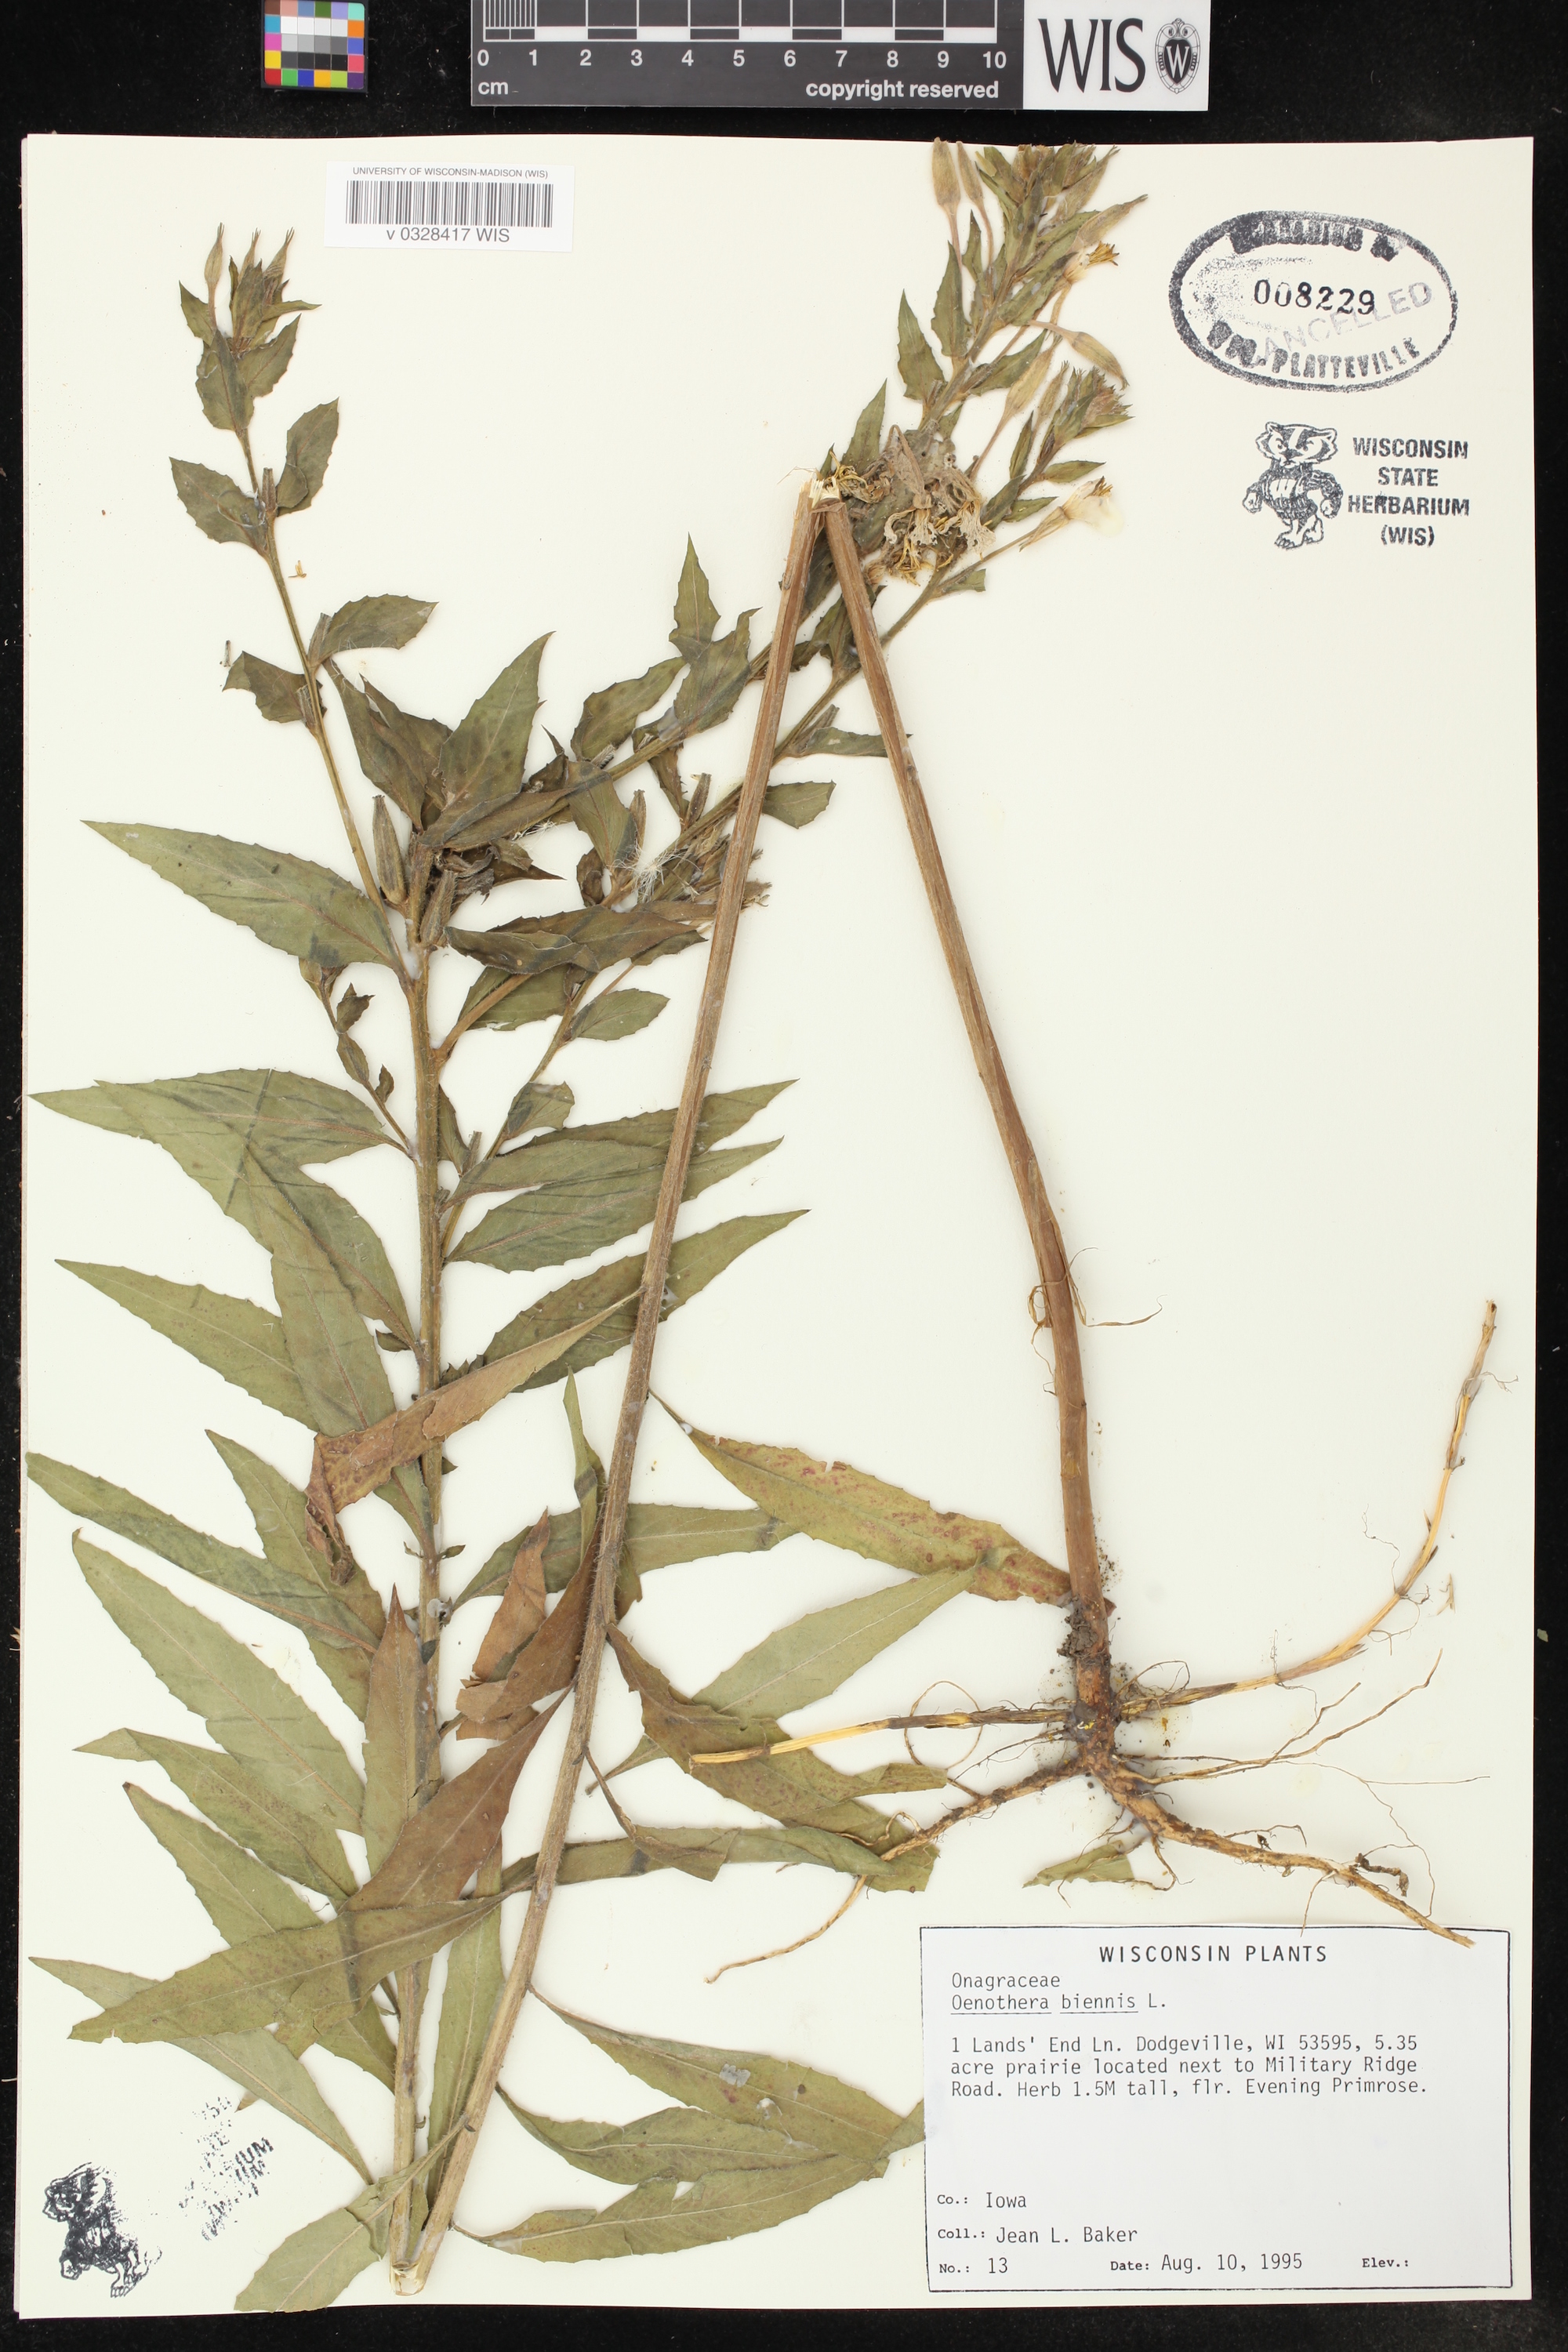 Evening Primrose specimen collected on Lands' End Lane in Dodgeville, Wisconsin on August 10, 1995.